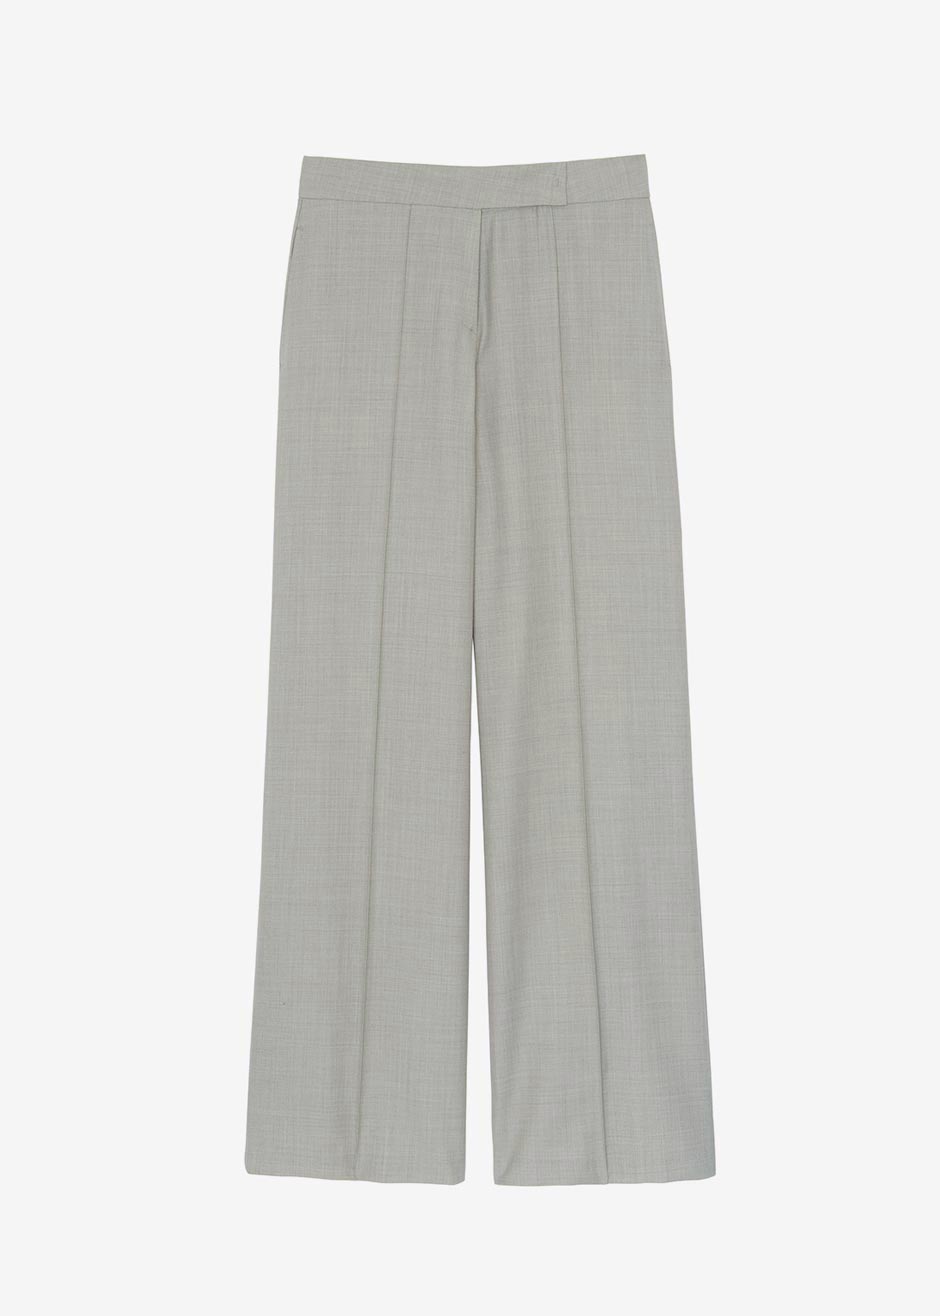 Mattea Suit Trousers in Agate Melange - 10